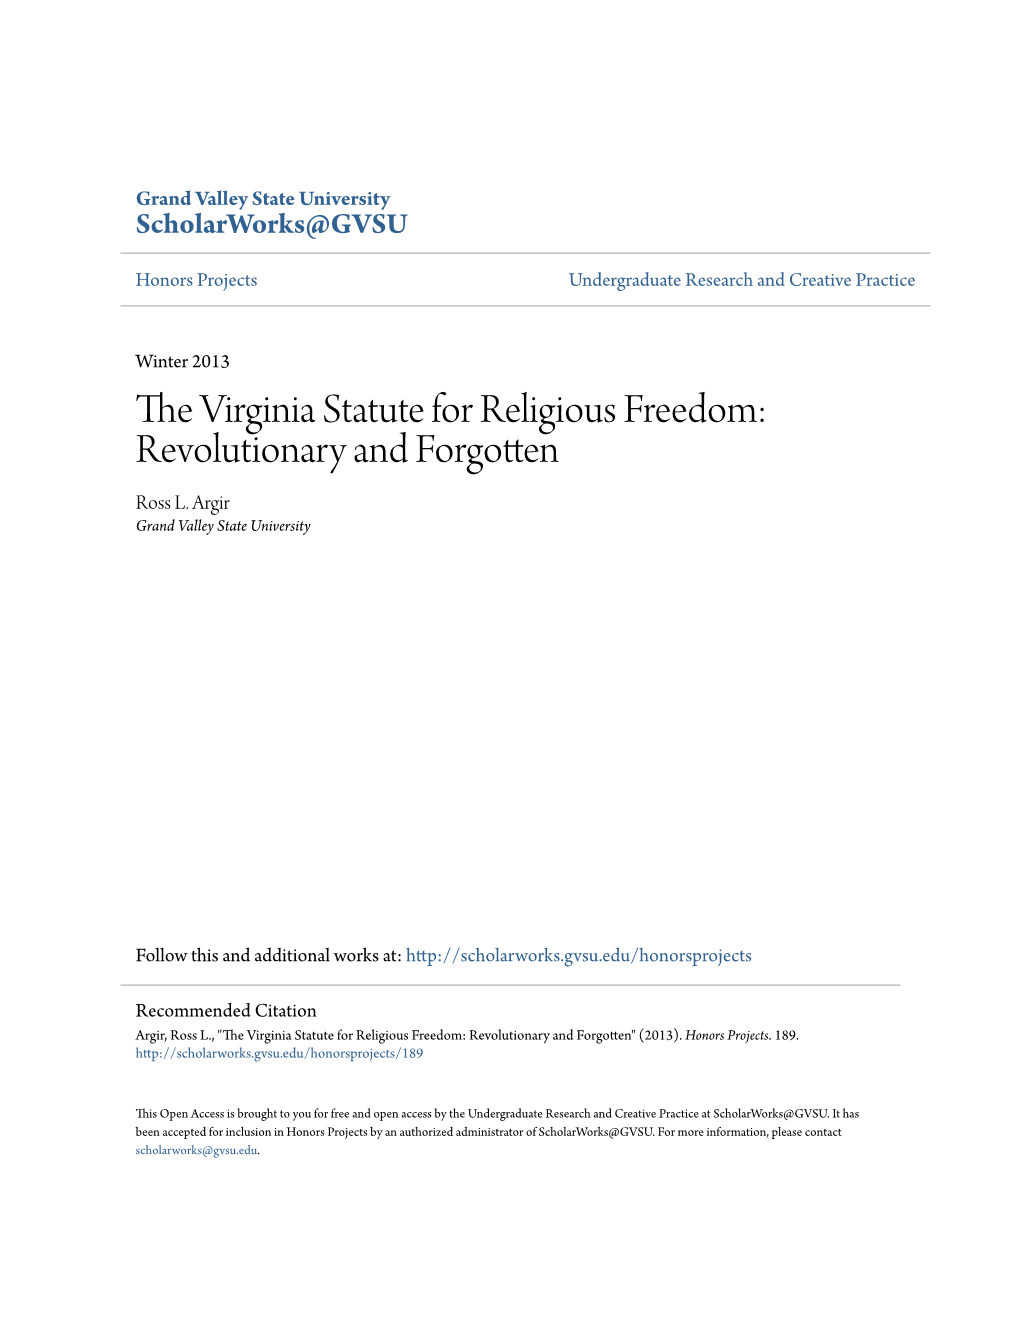 The Virginia Statute for Religious Freedom